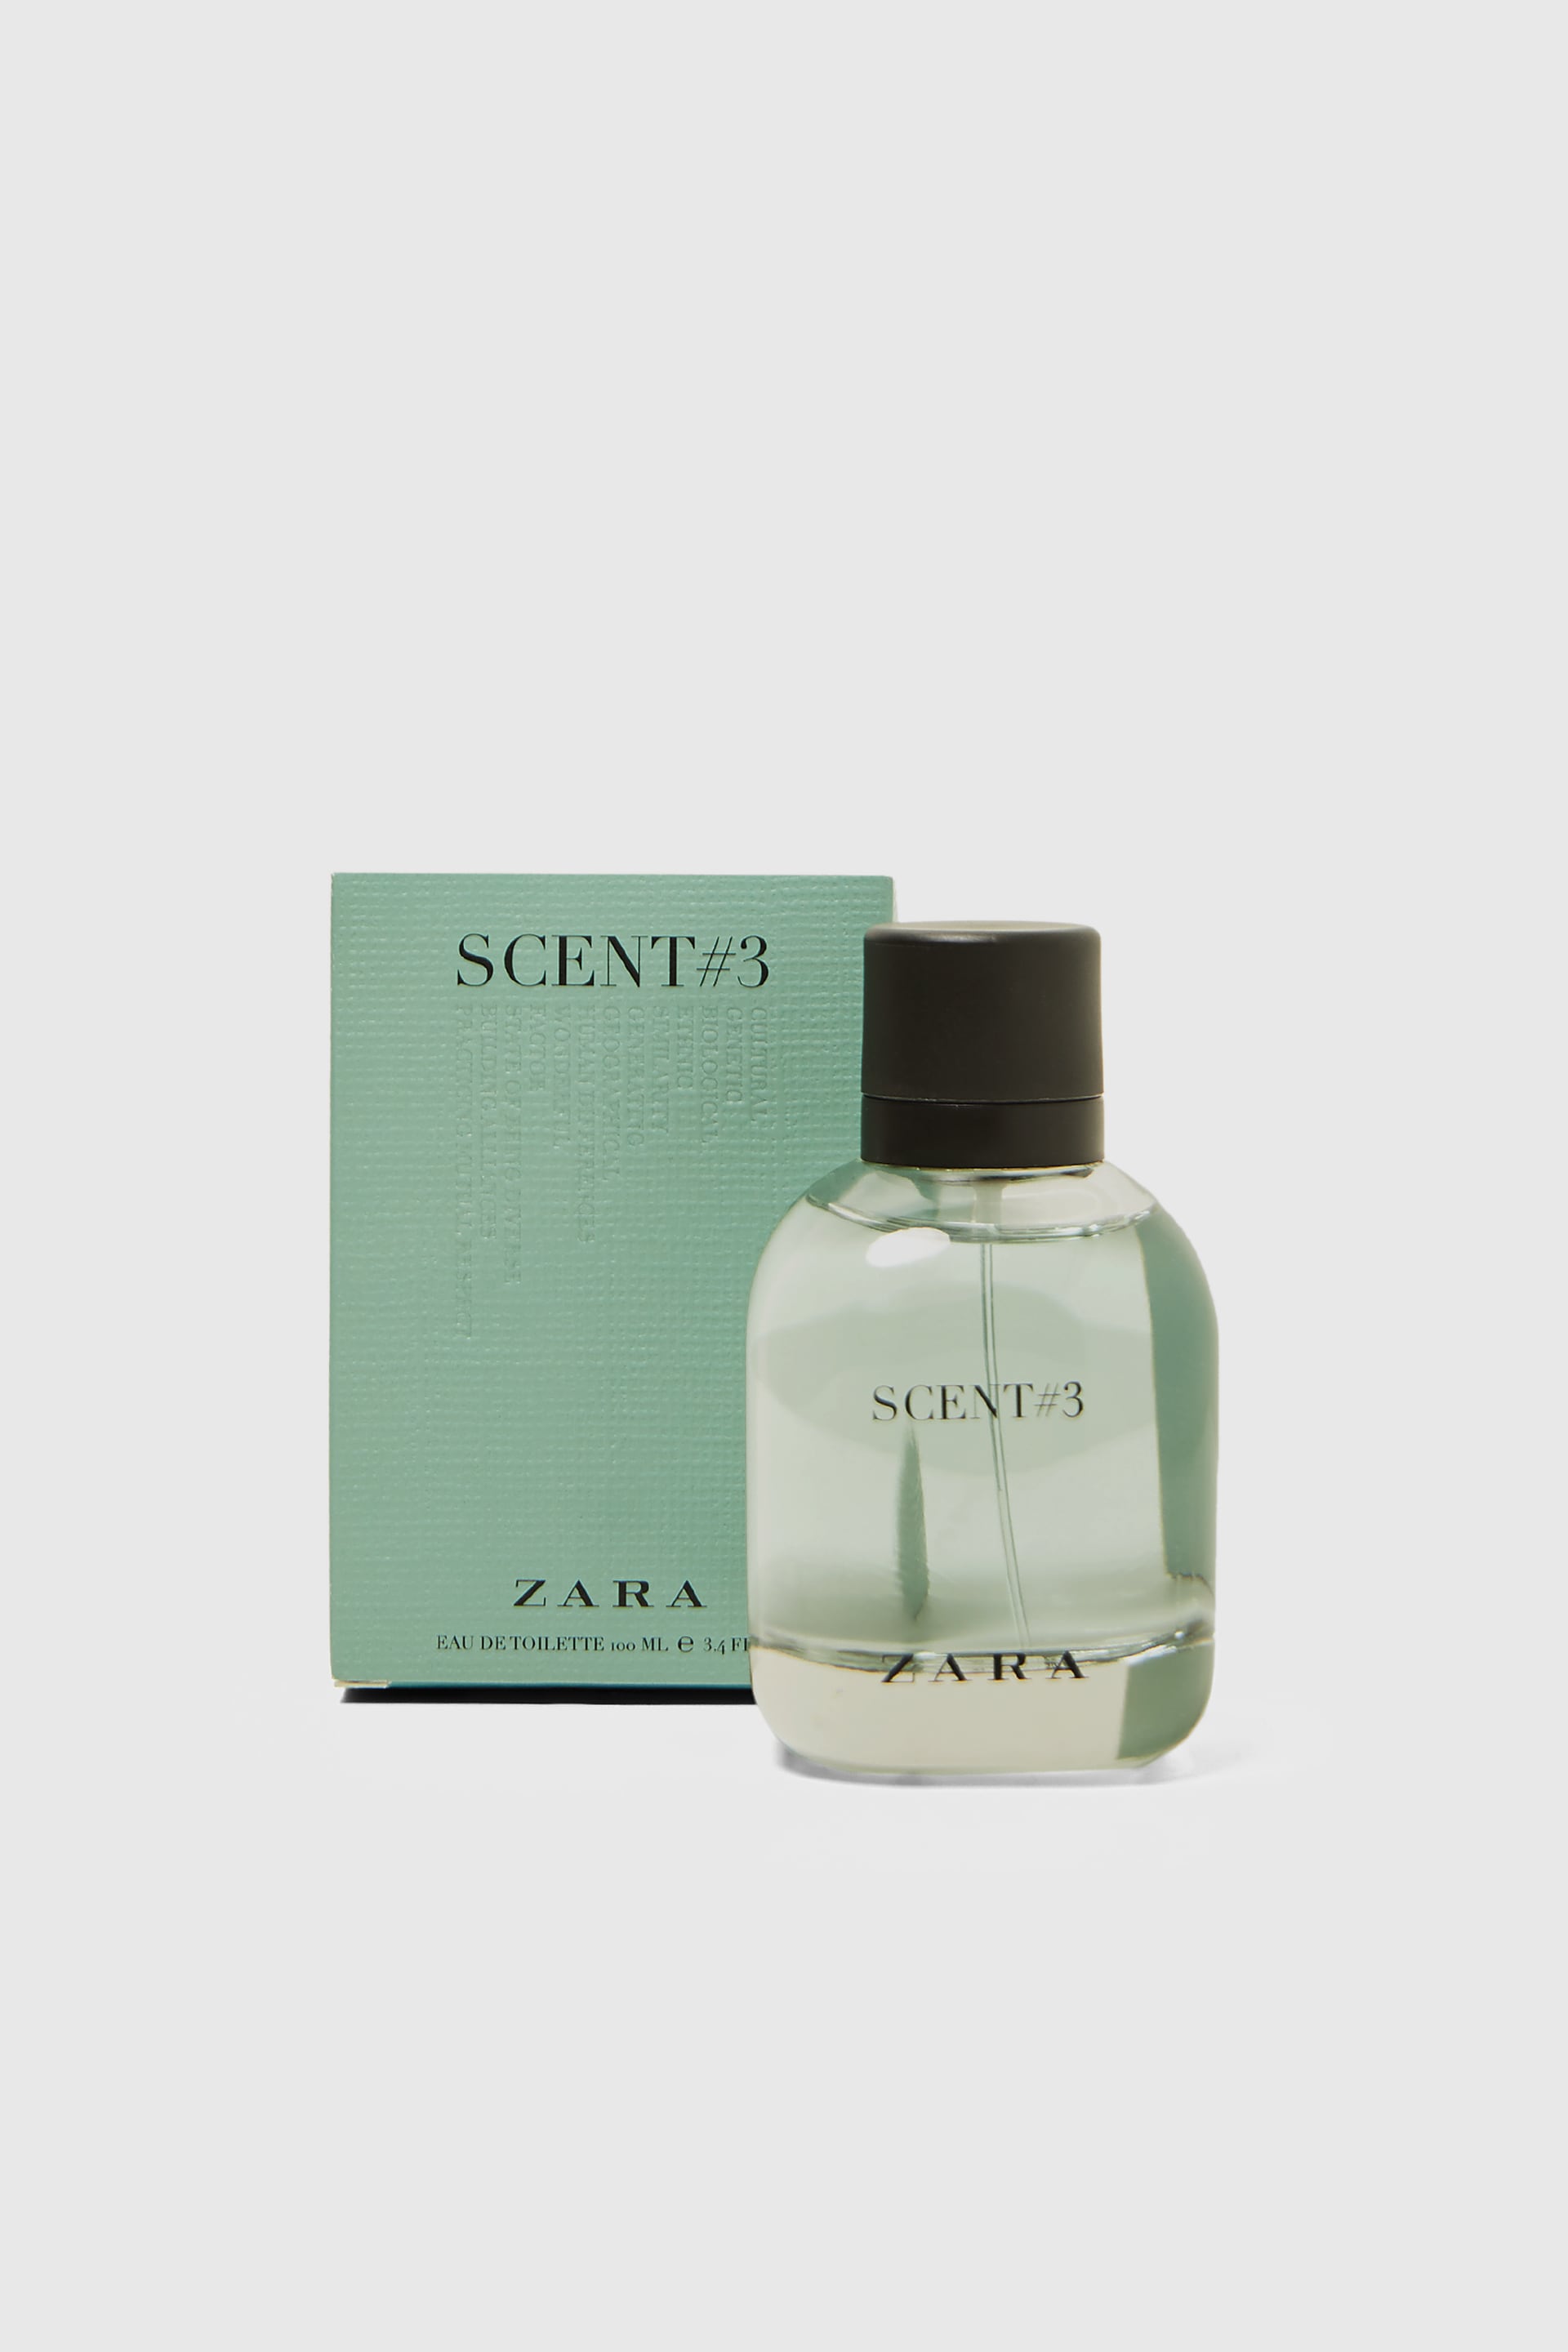 Scent #3 Zara cologne - a new fragrance 